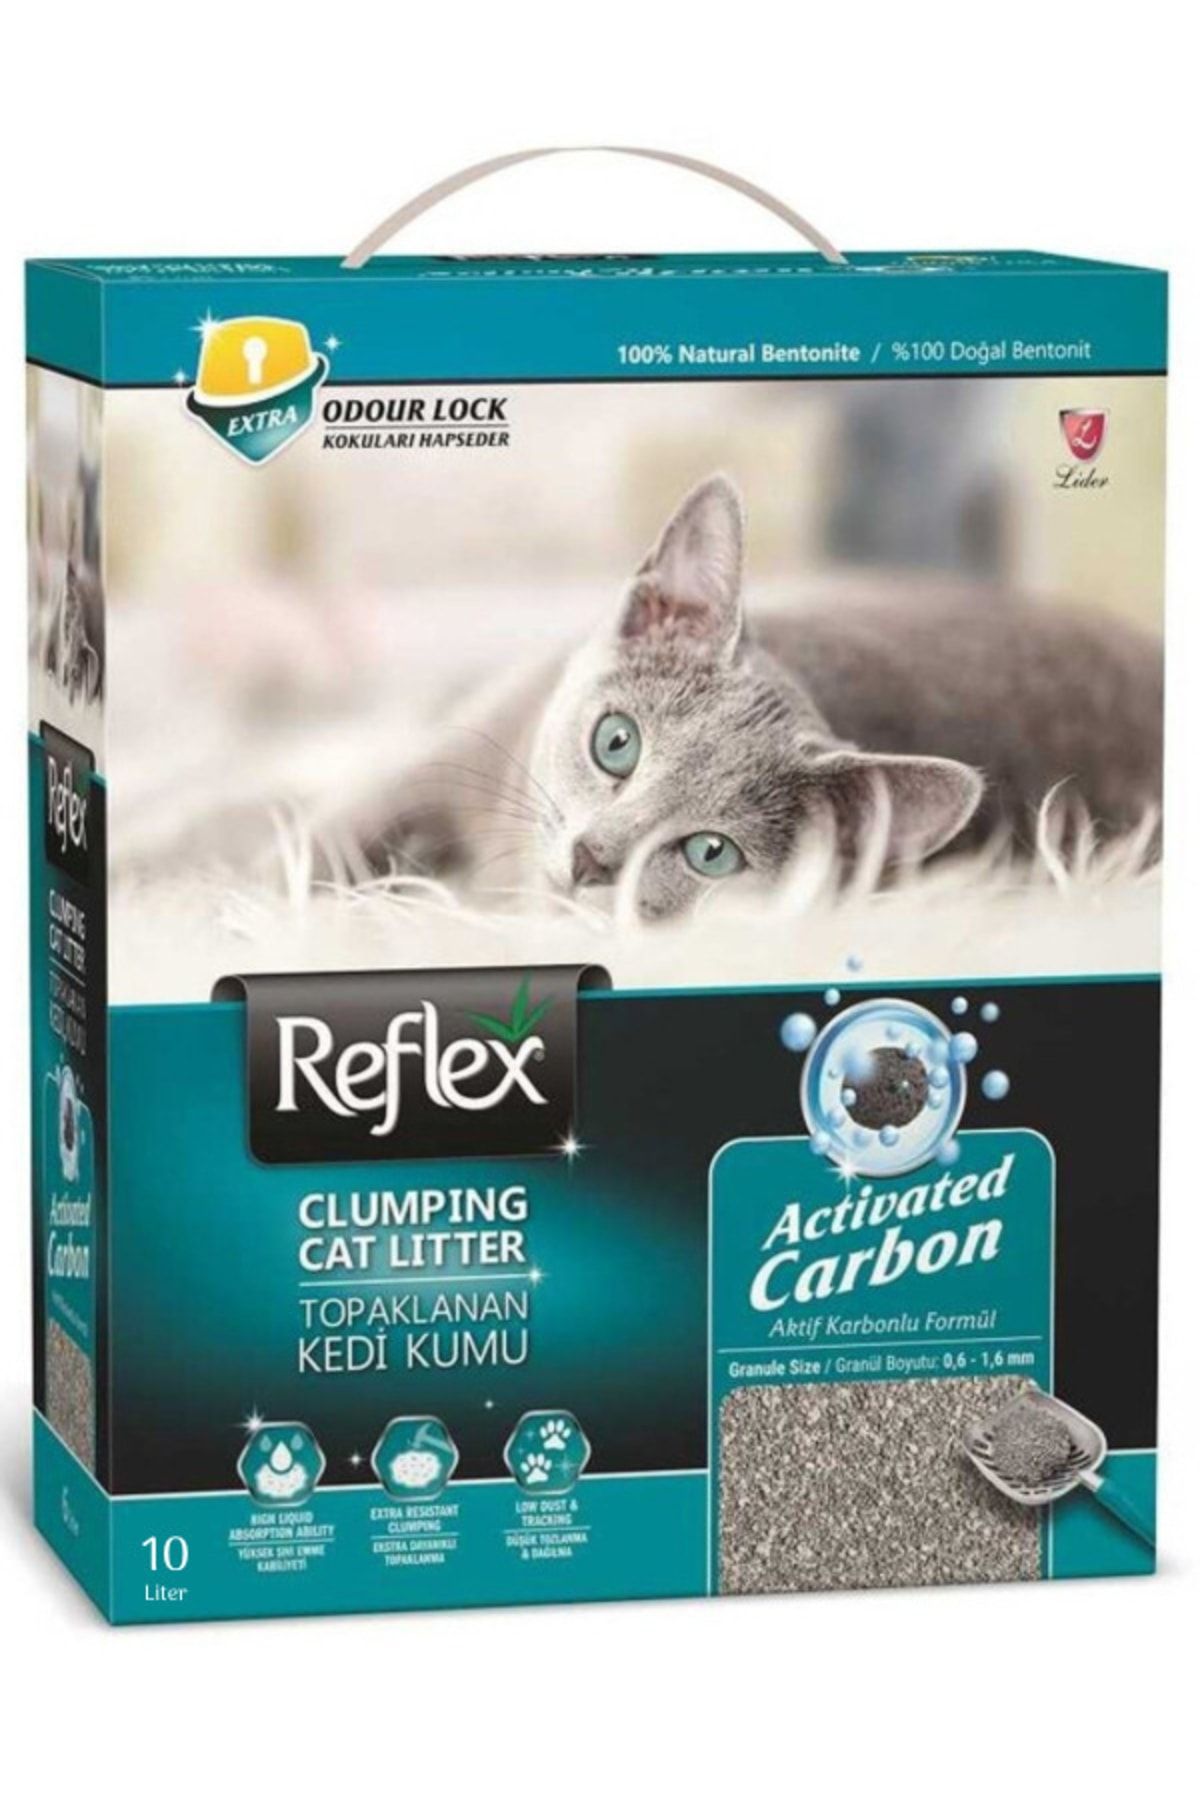 Reflex Activated Carbon Clumping Cat Litter Aktif Karbonlu Topaklanan Koku Hapseden Kedi Kumu 10 Lt